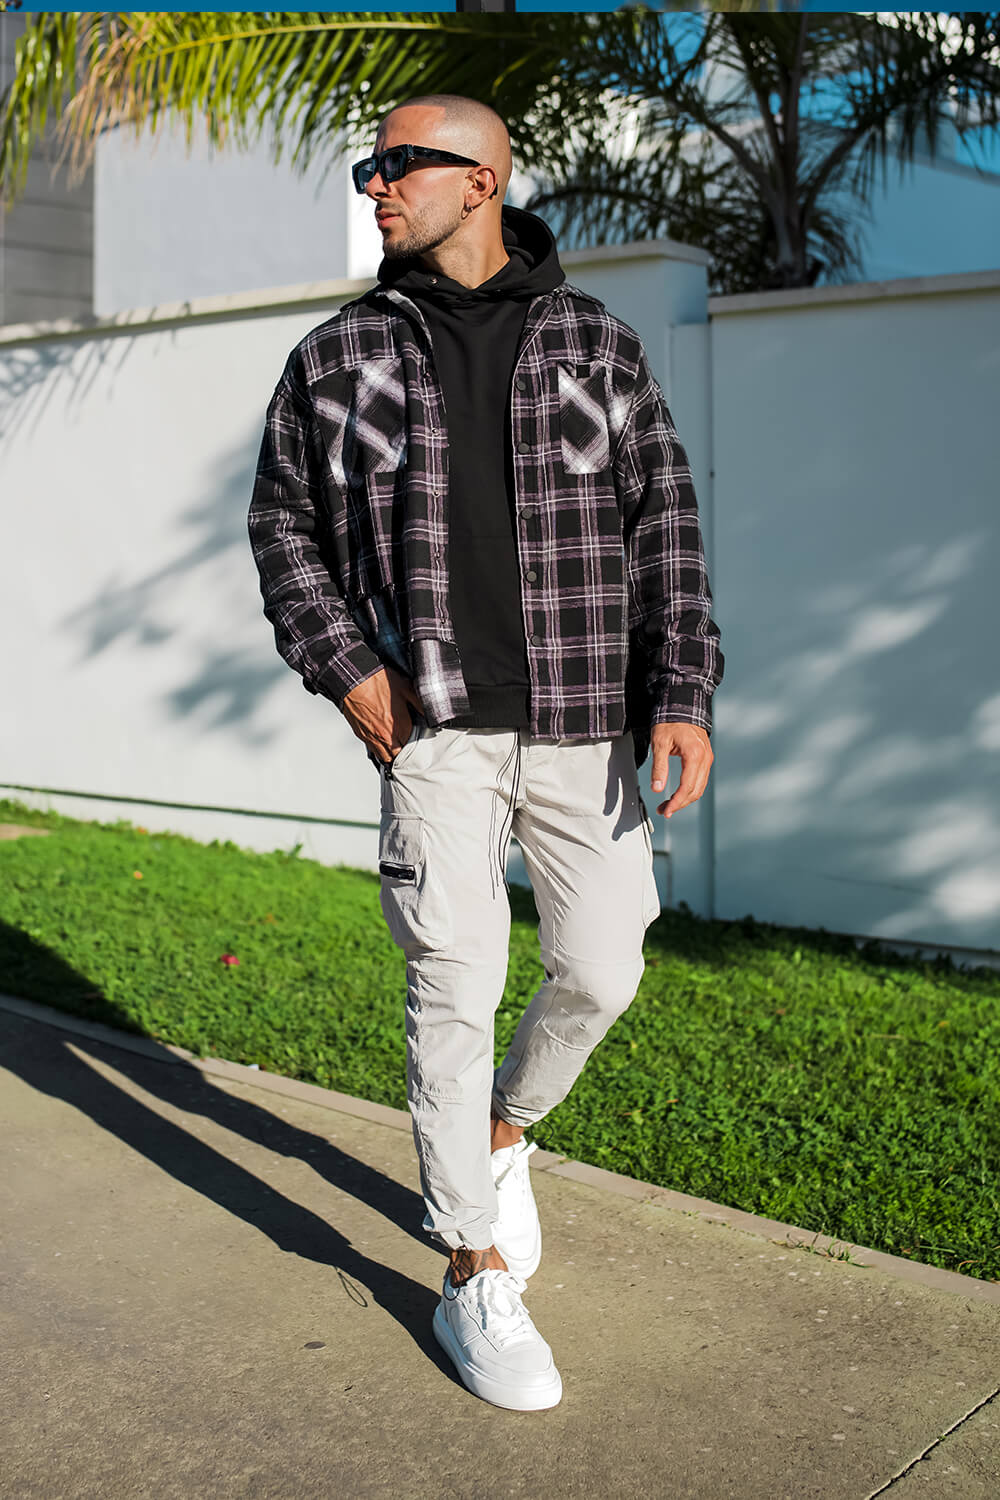 Split Check Flannel Shirt - Black/White